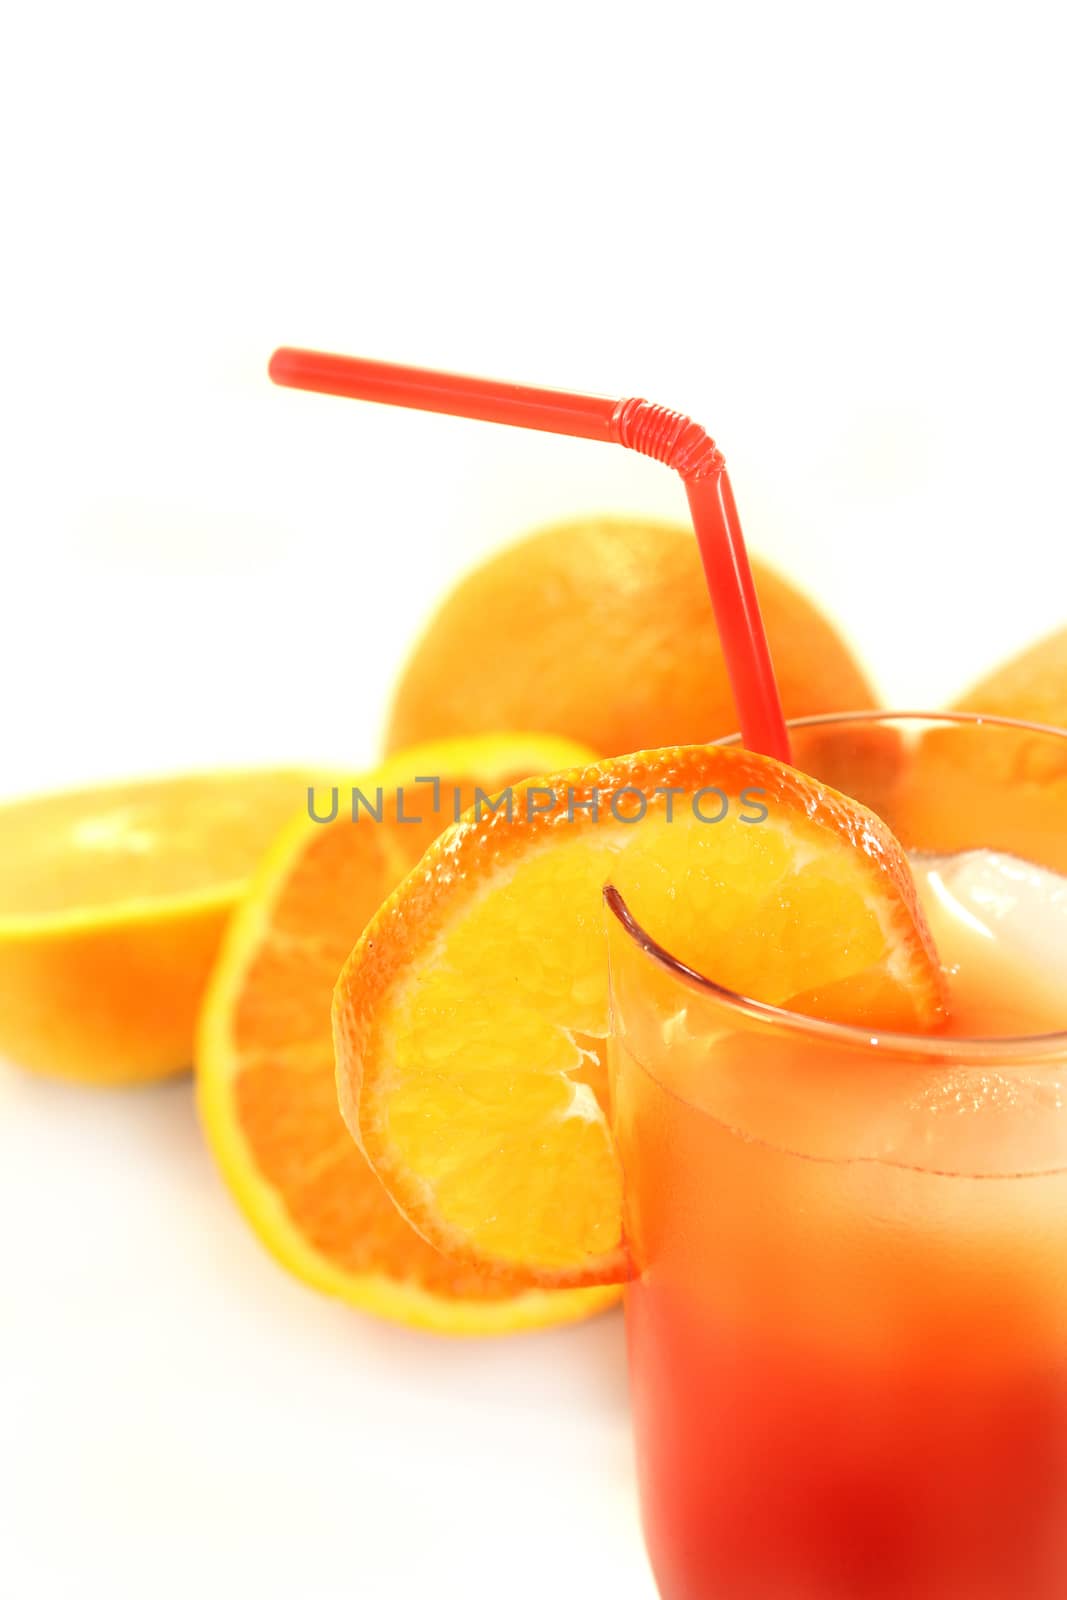 a glass of Campari orange and ice cubes